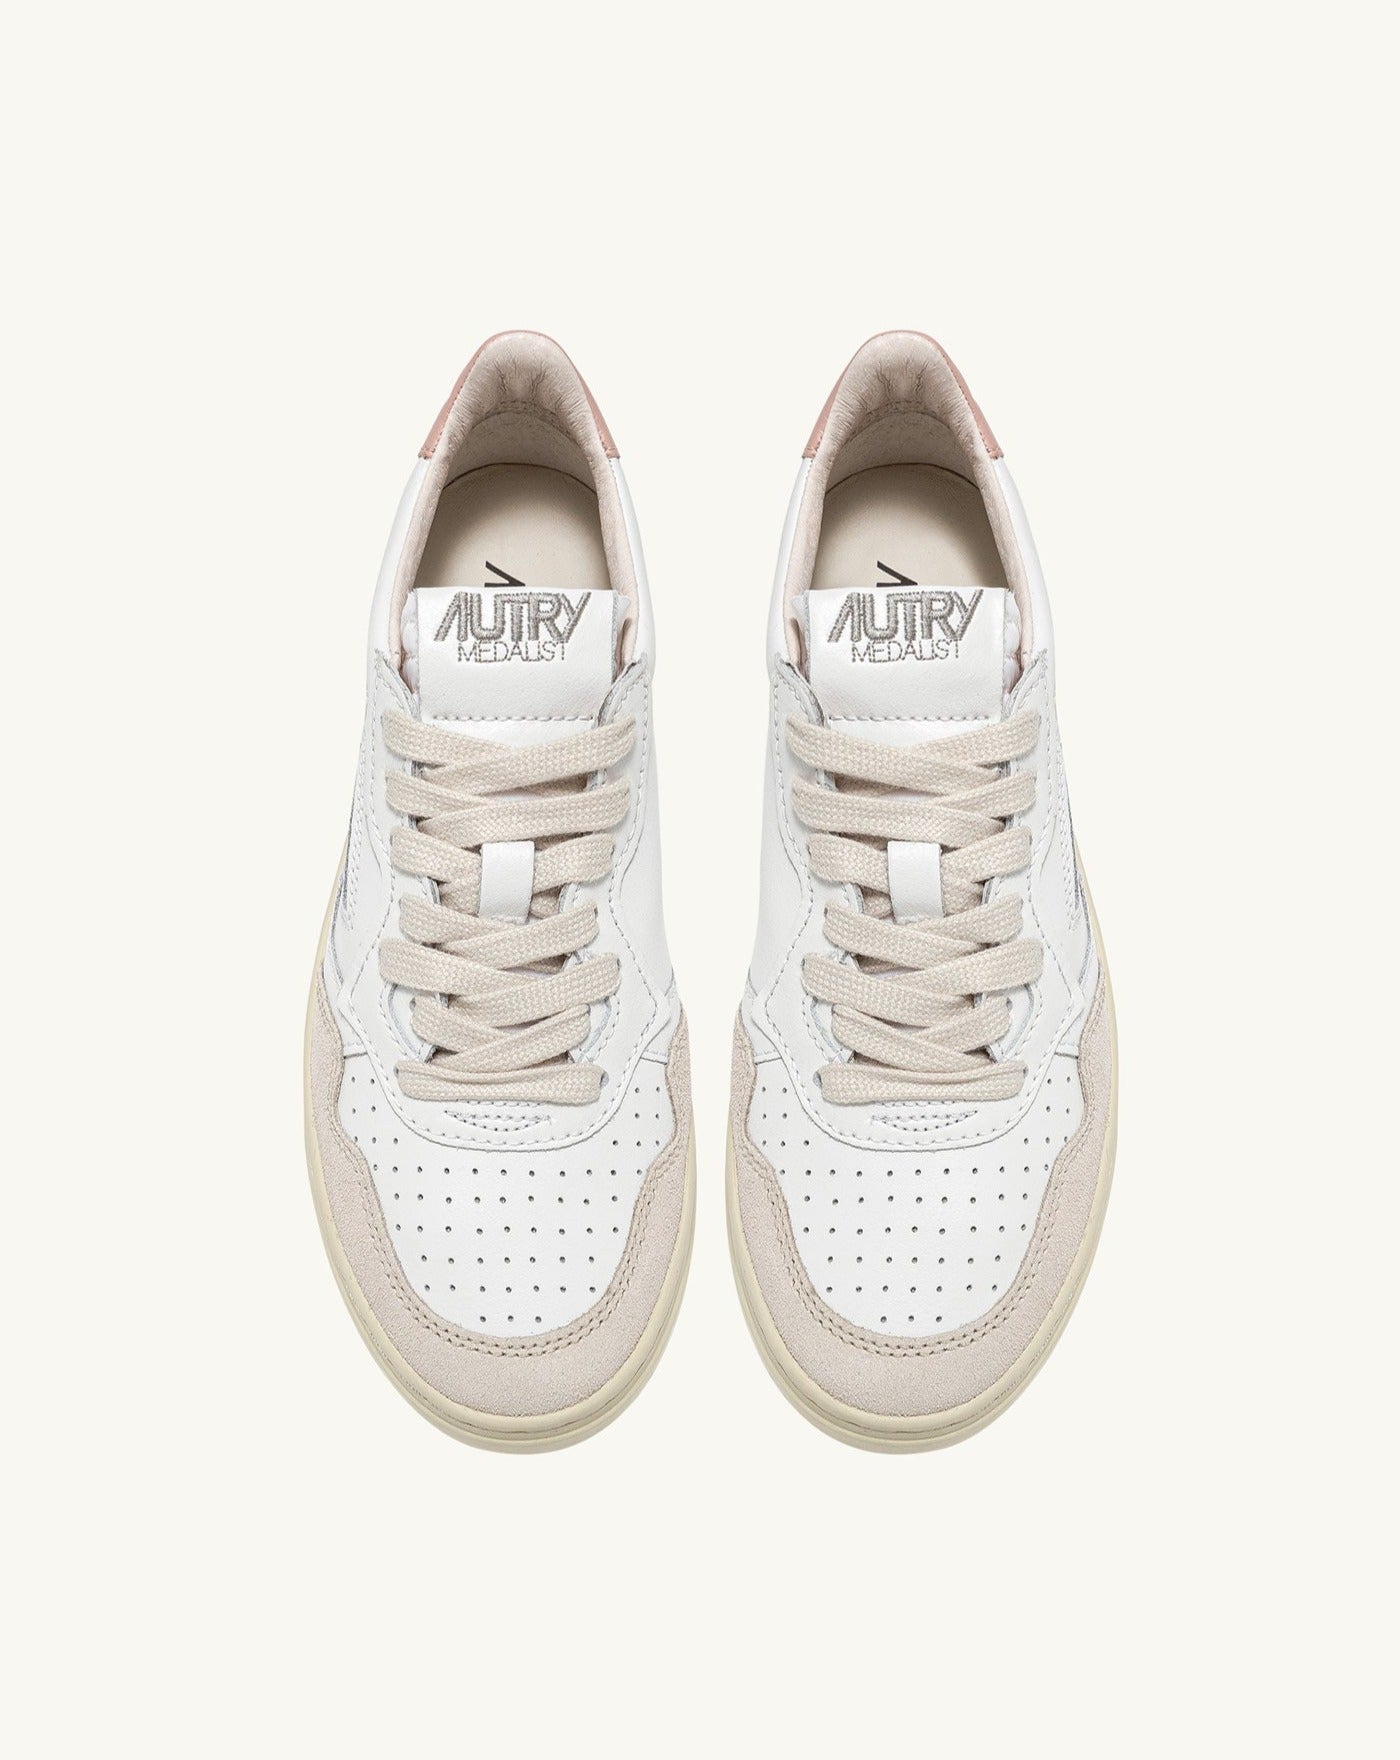 Autry LS37 White Pow sneakers